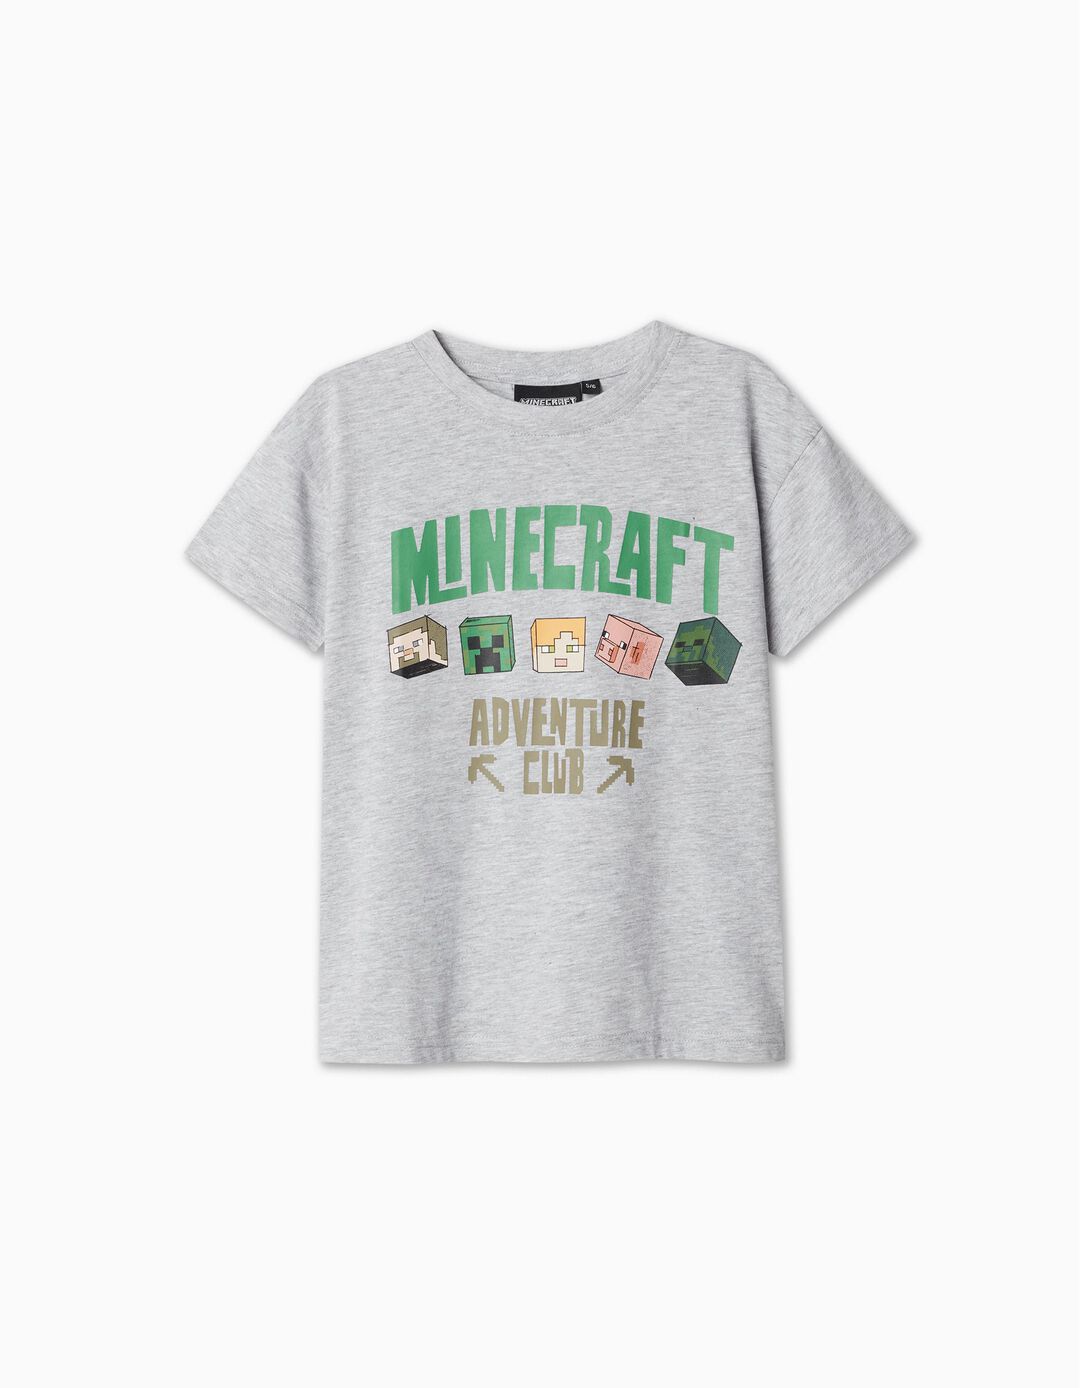 'Minecraft' T-shirt, Boy, Light Gray